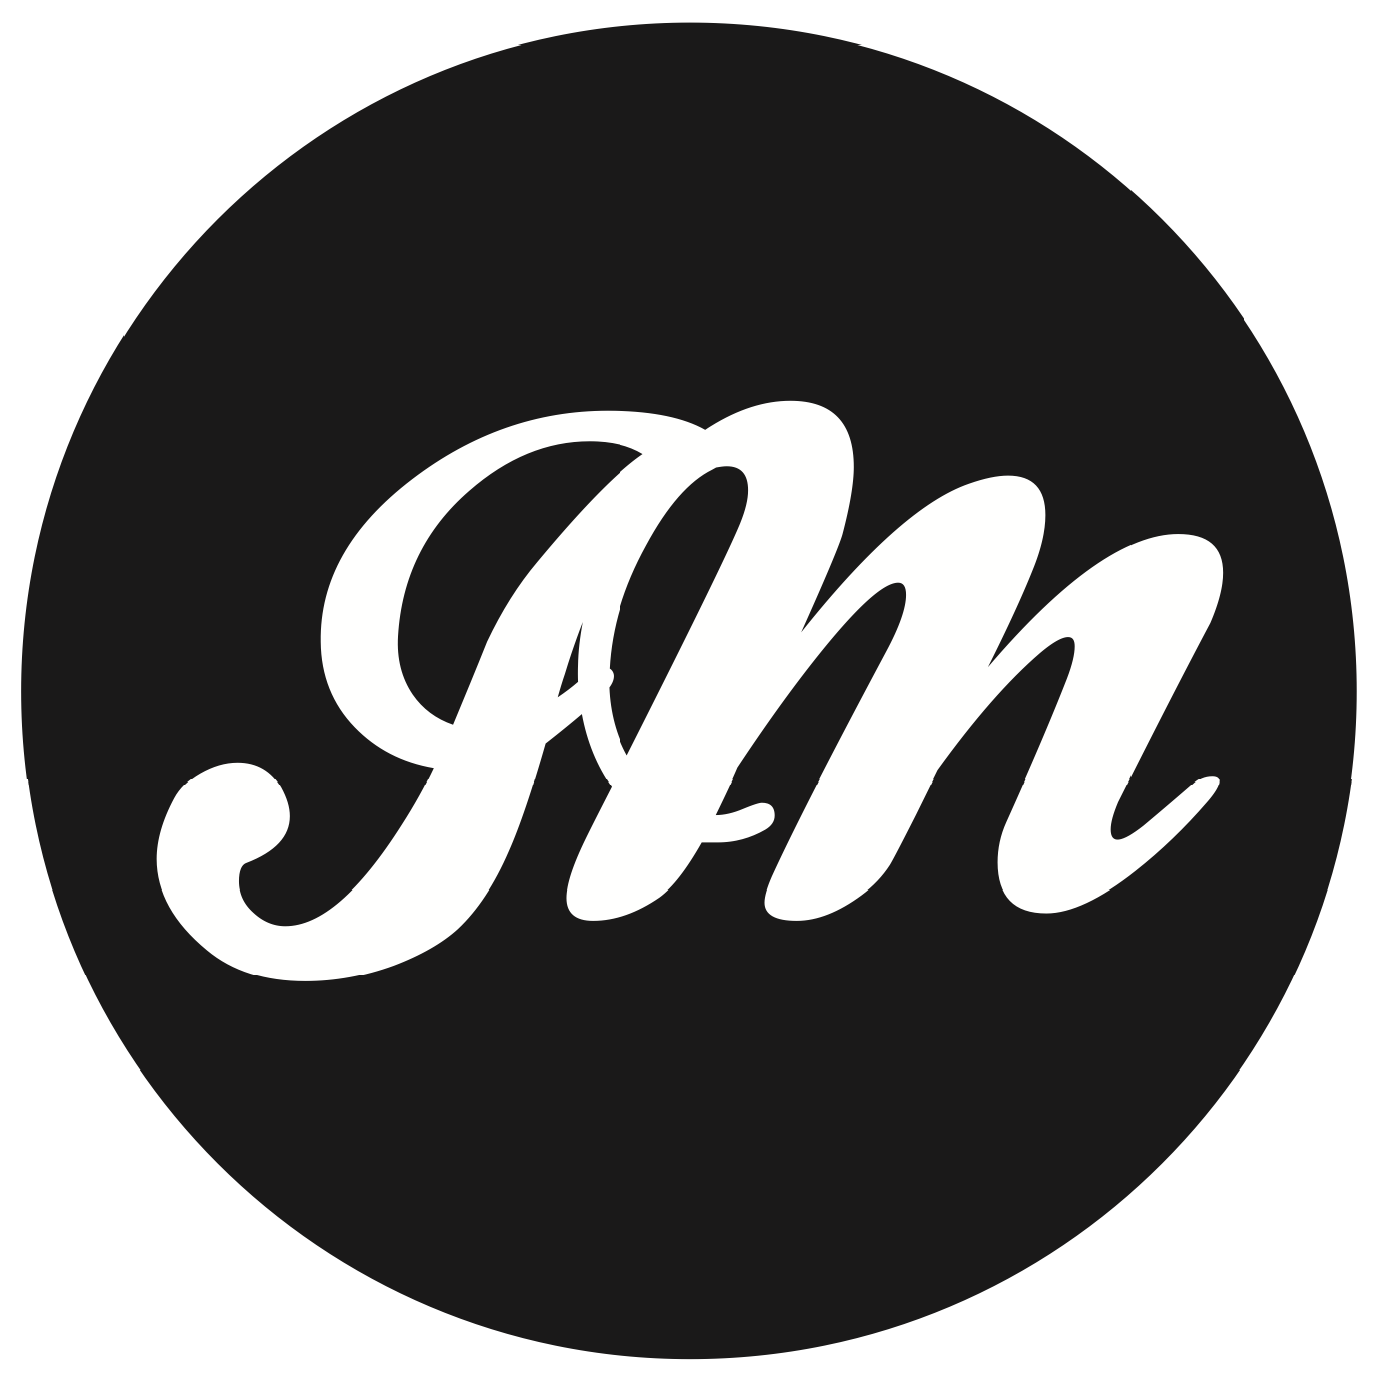 The Official online John Mayer store.